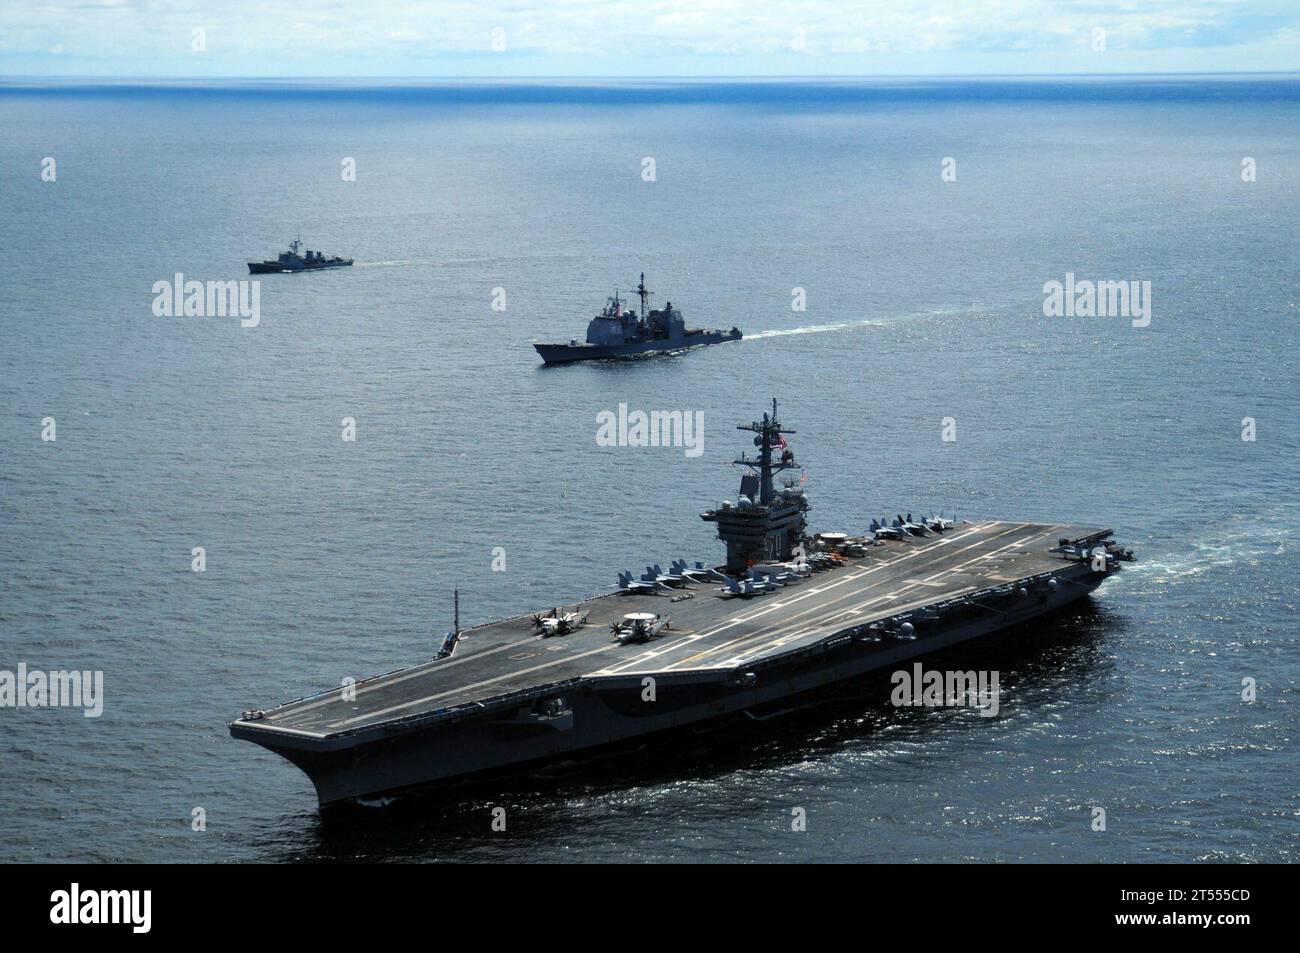 Militares extranjeros, marina, buques, mares del sur 2010, Marina de los EE.UU., Uruguay (ROU 1), USS Bunker Hill (CG 52), USS Carl Vinson (CVN 70) Foto de stock